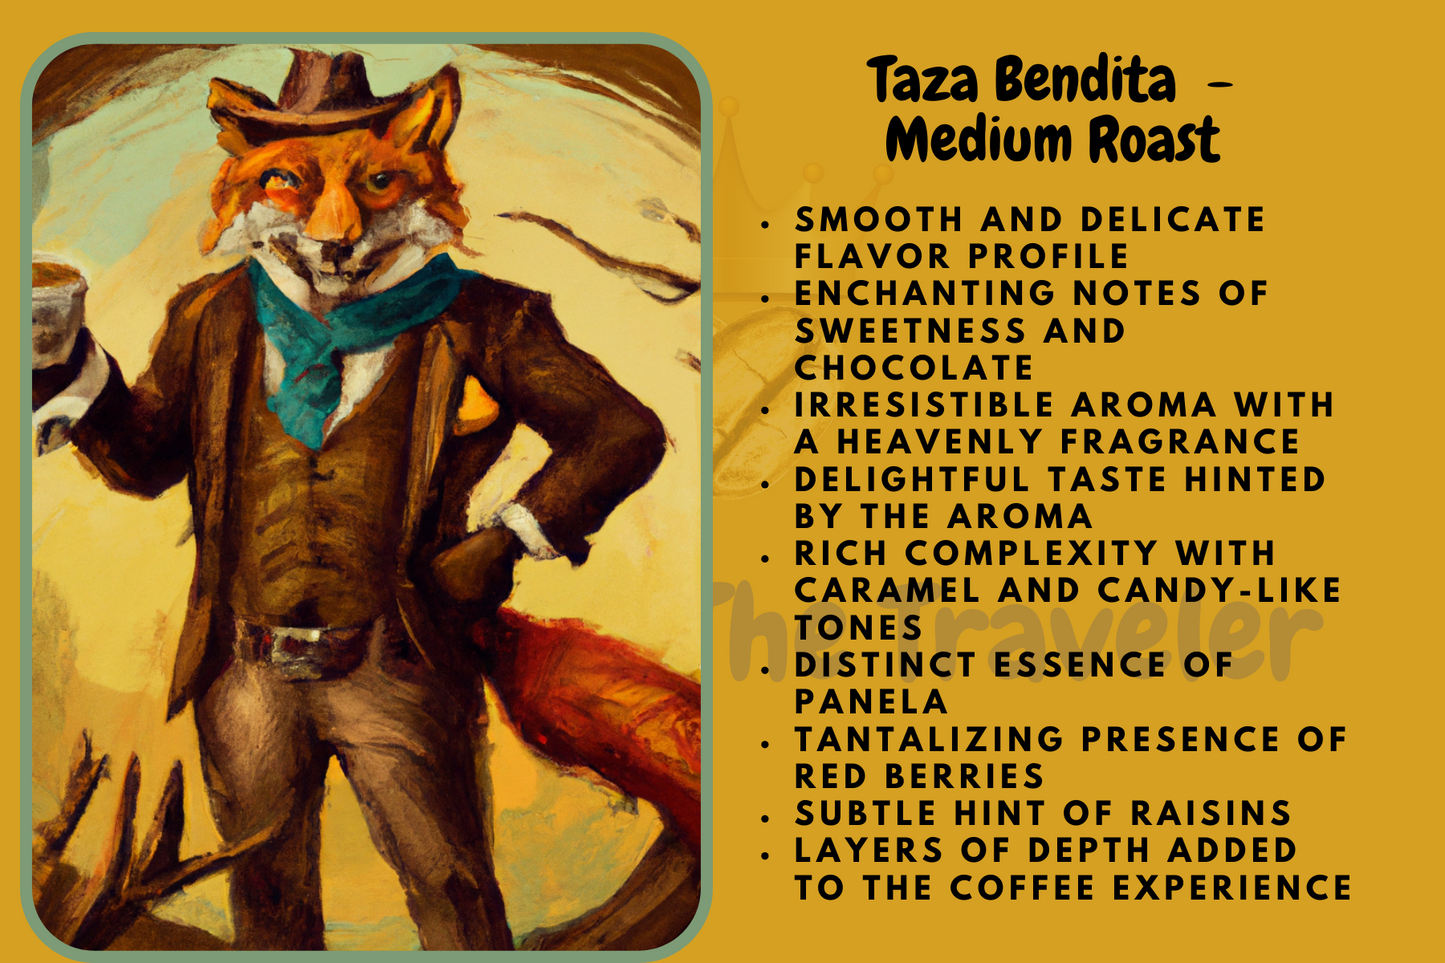 Taza Bendita - Medium Roast